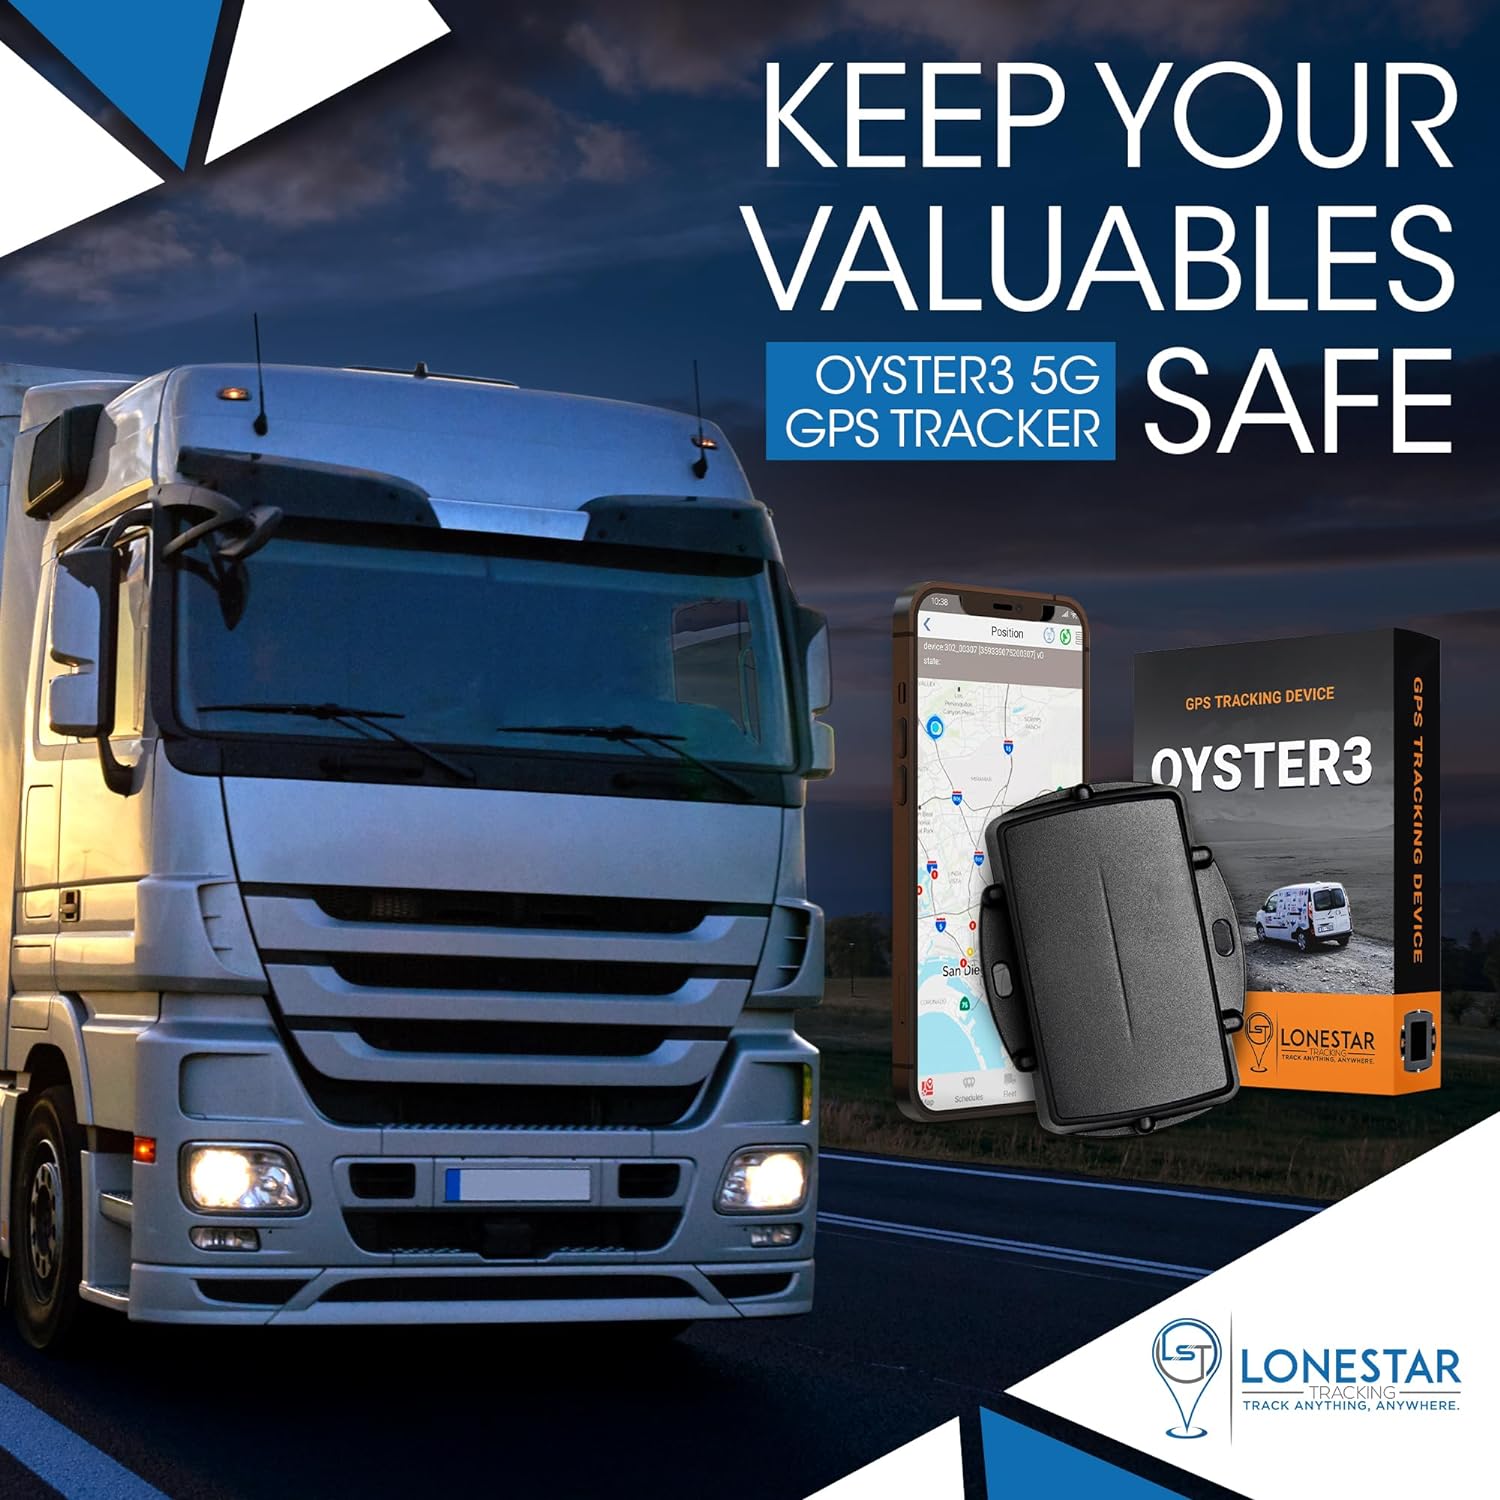 Oyster3 5G Waterproof GPS Tracker - Instant Alerts - ATLT Device